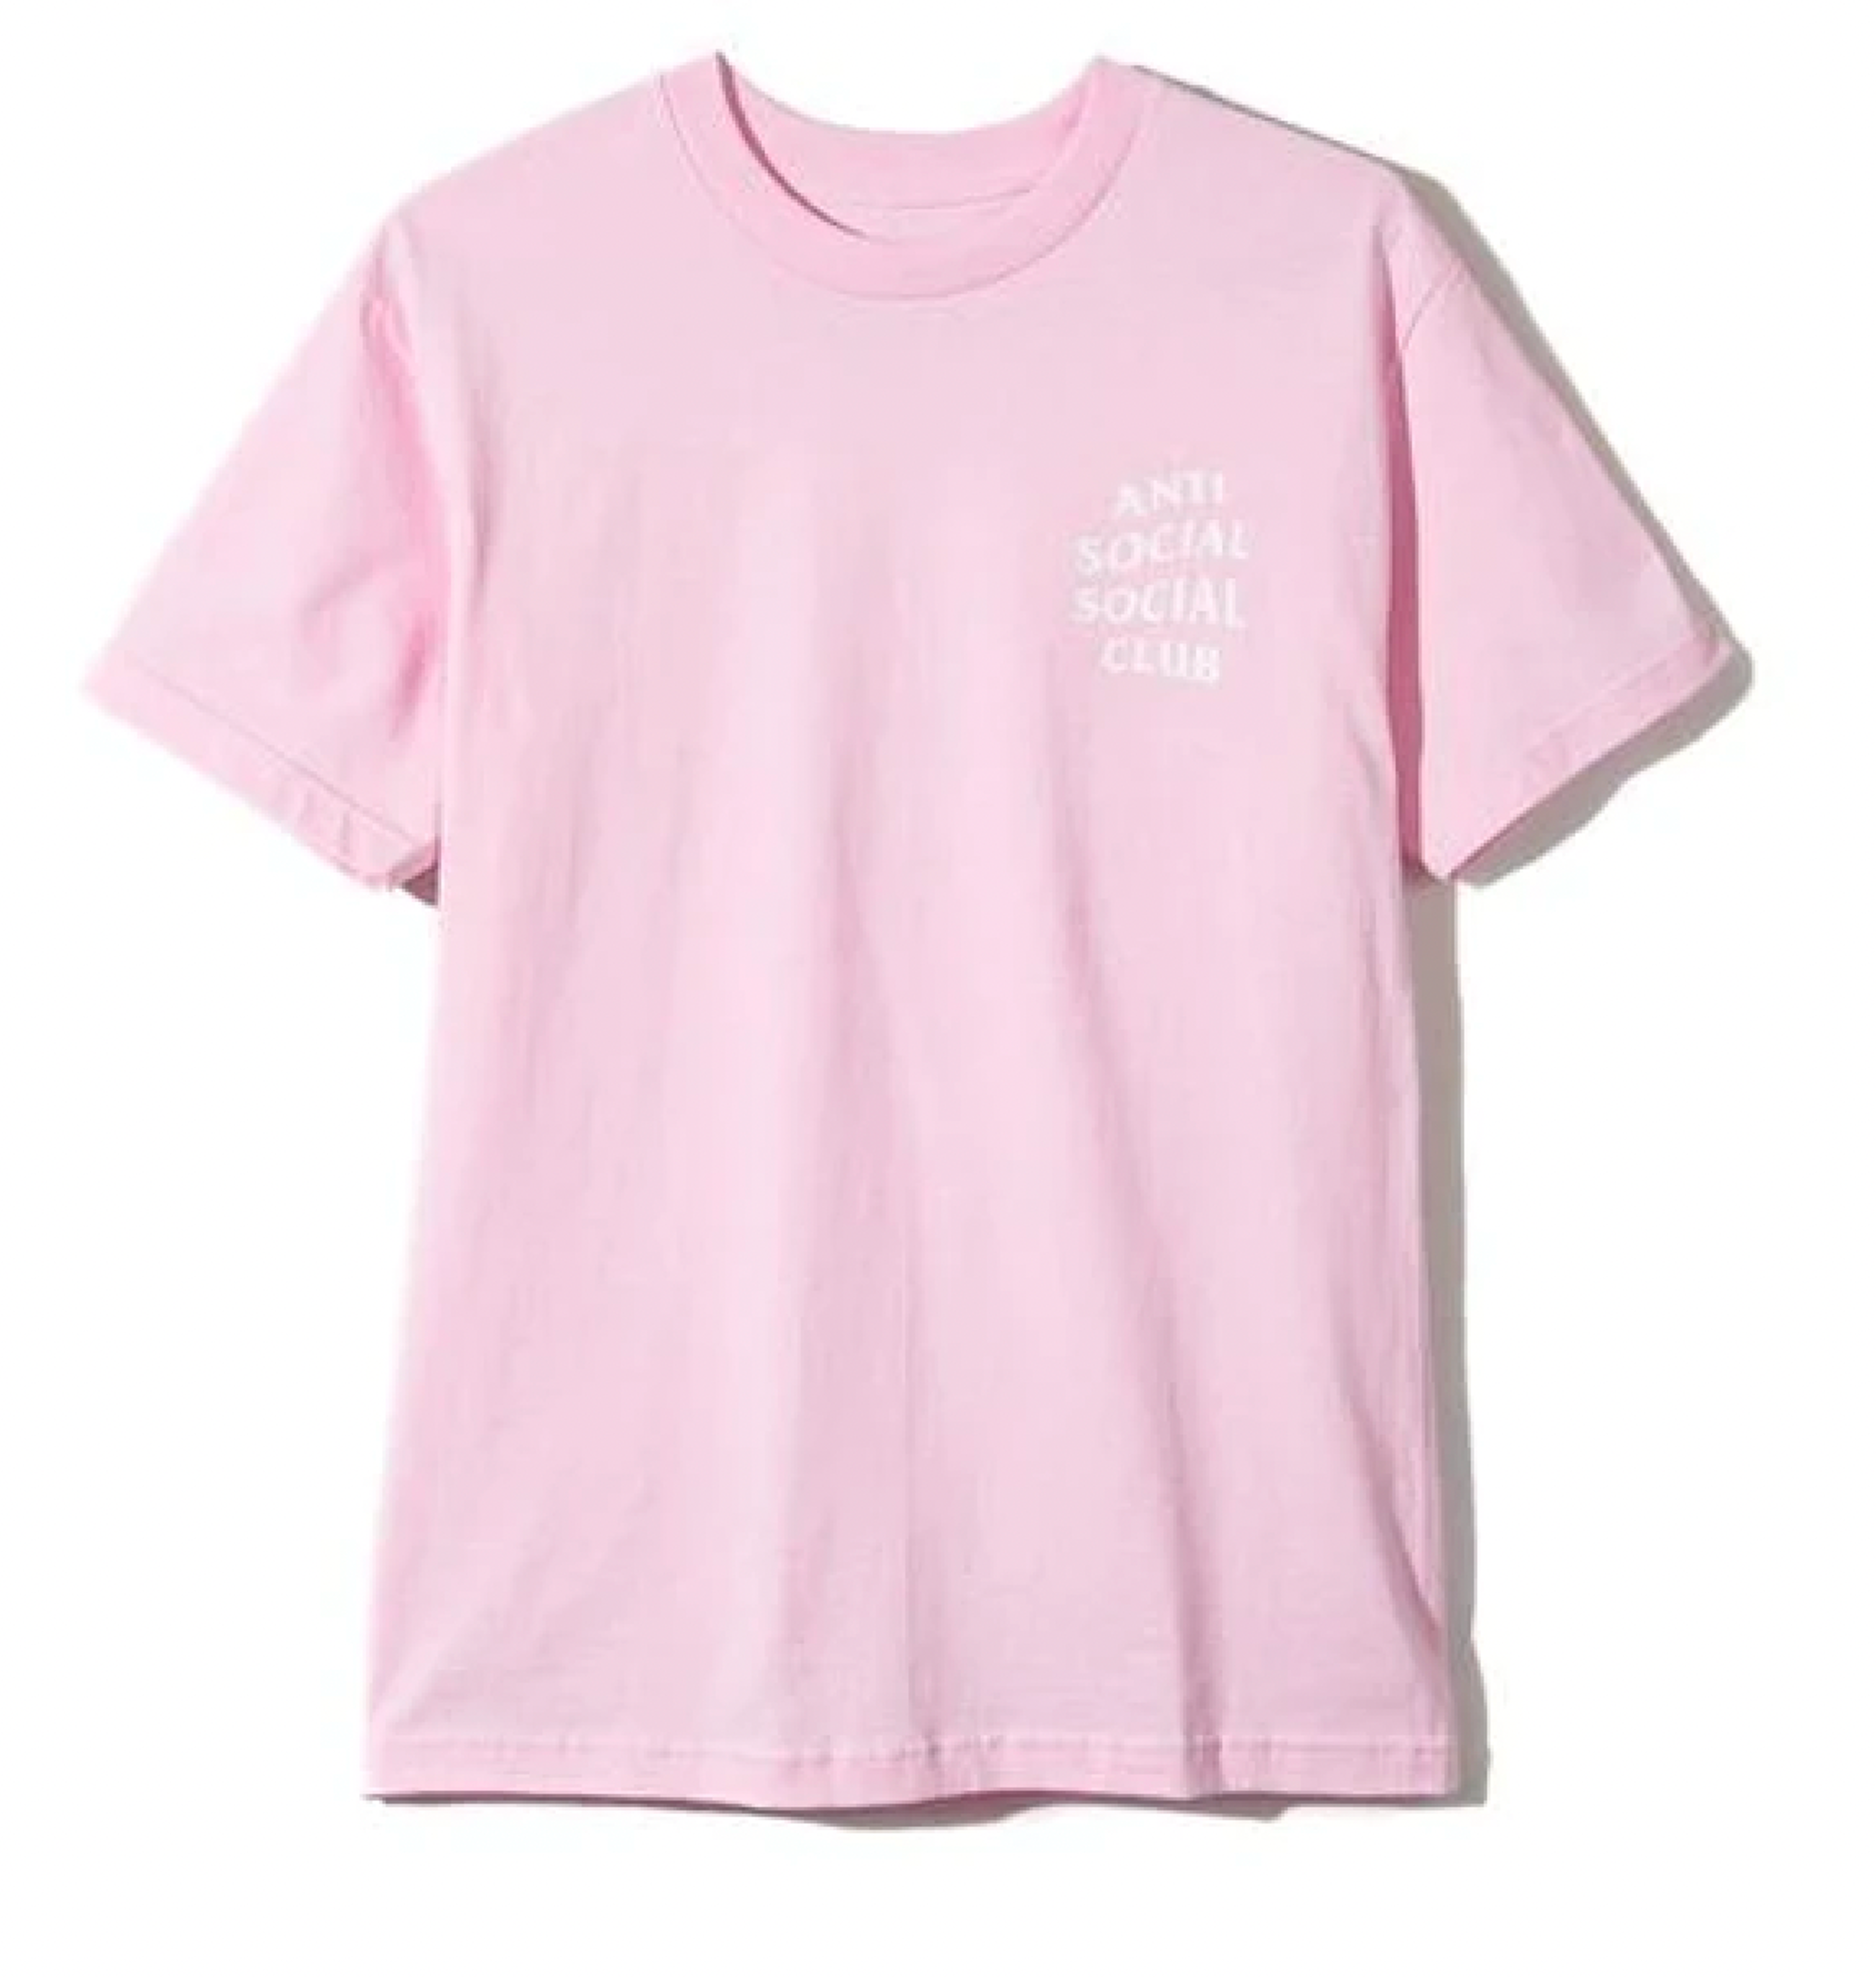 Anti social social club - Kkoch T-Shirt - Pink